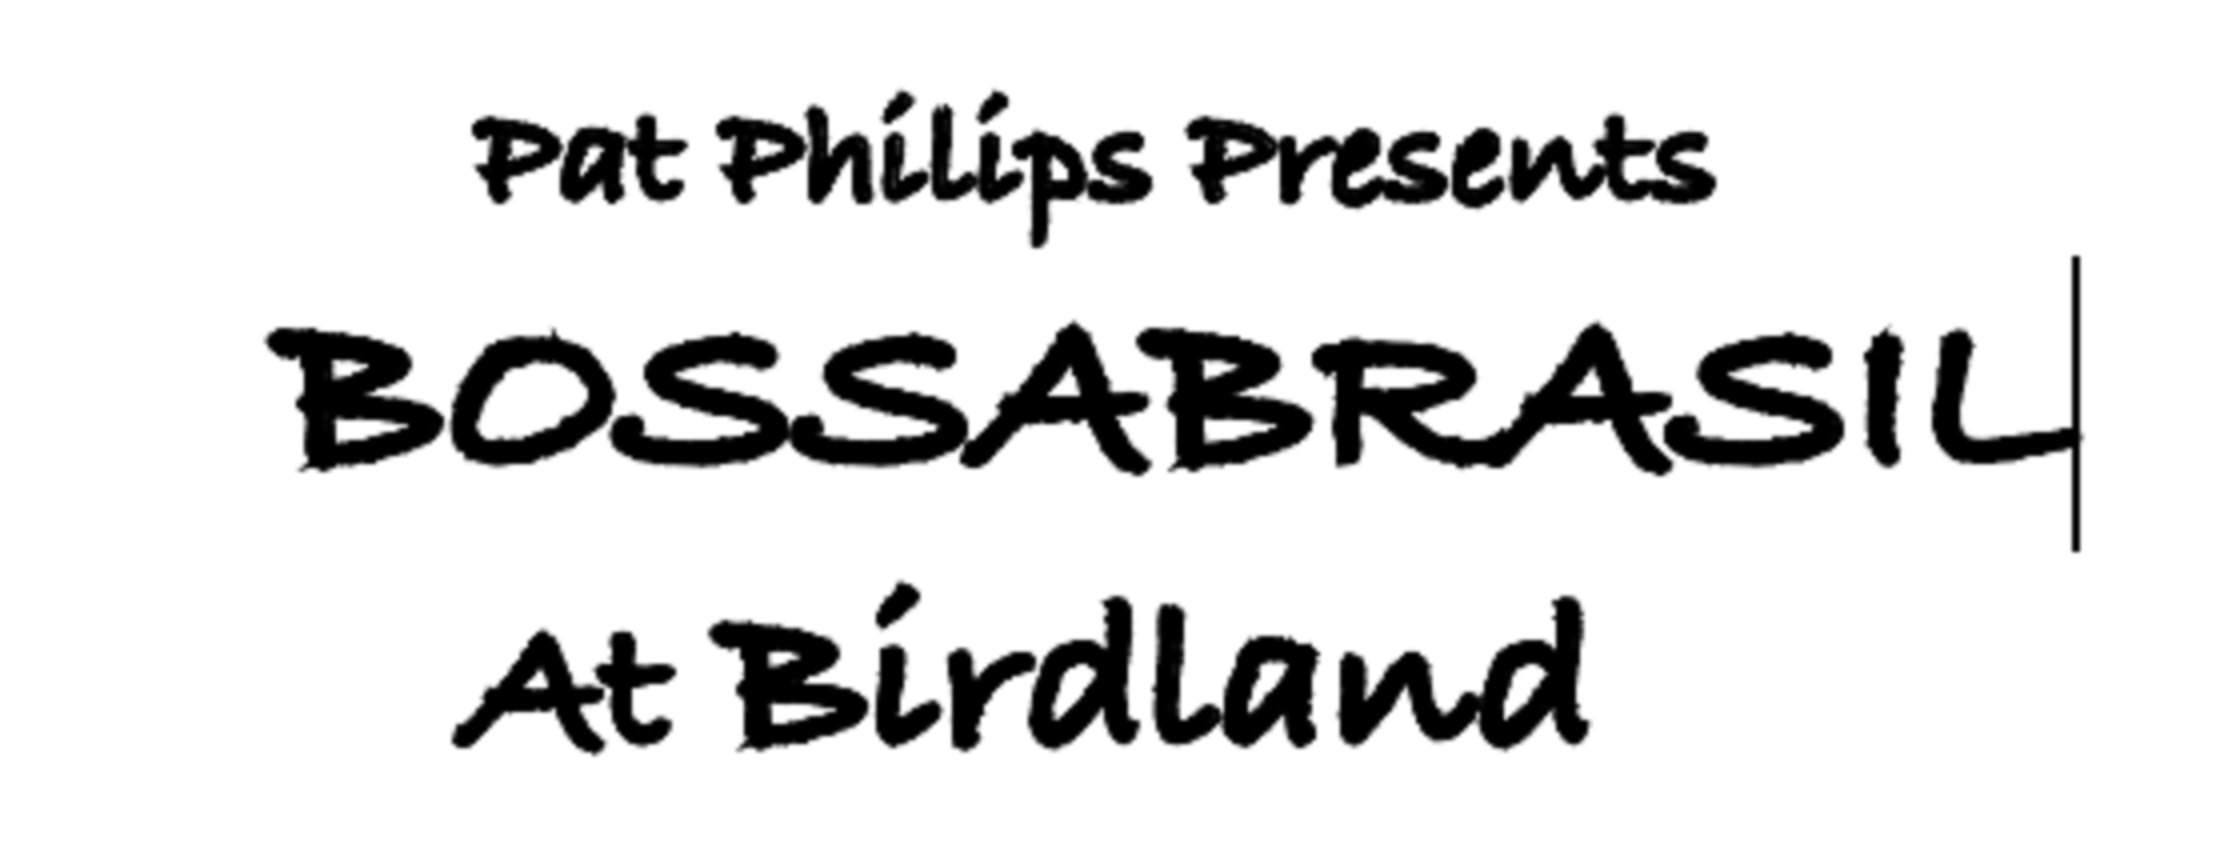 BOSSABRASIL At Birdland September 13-17 Featuring MARCOS VALLE & PAULA MORELENBAUM